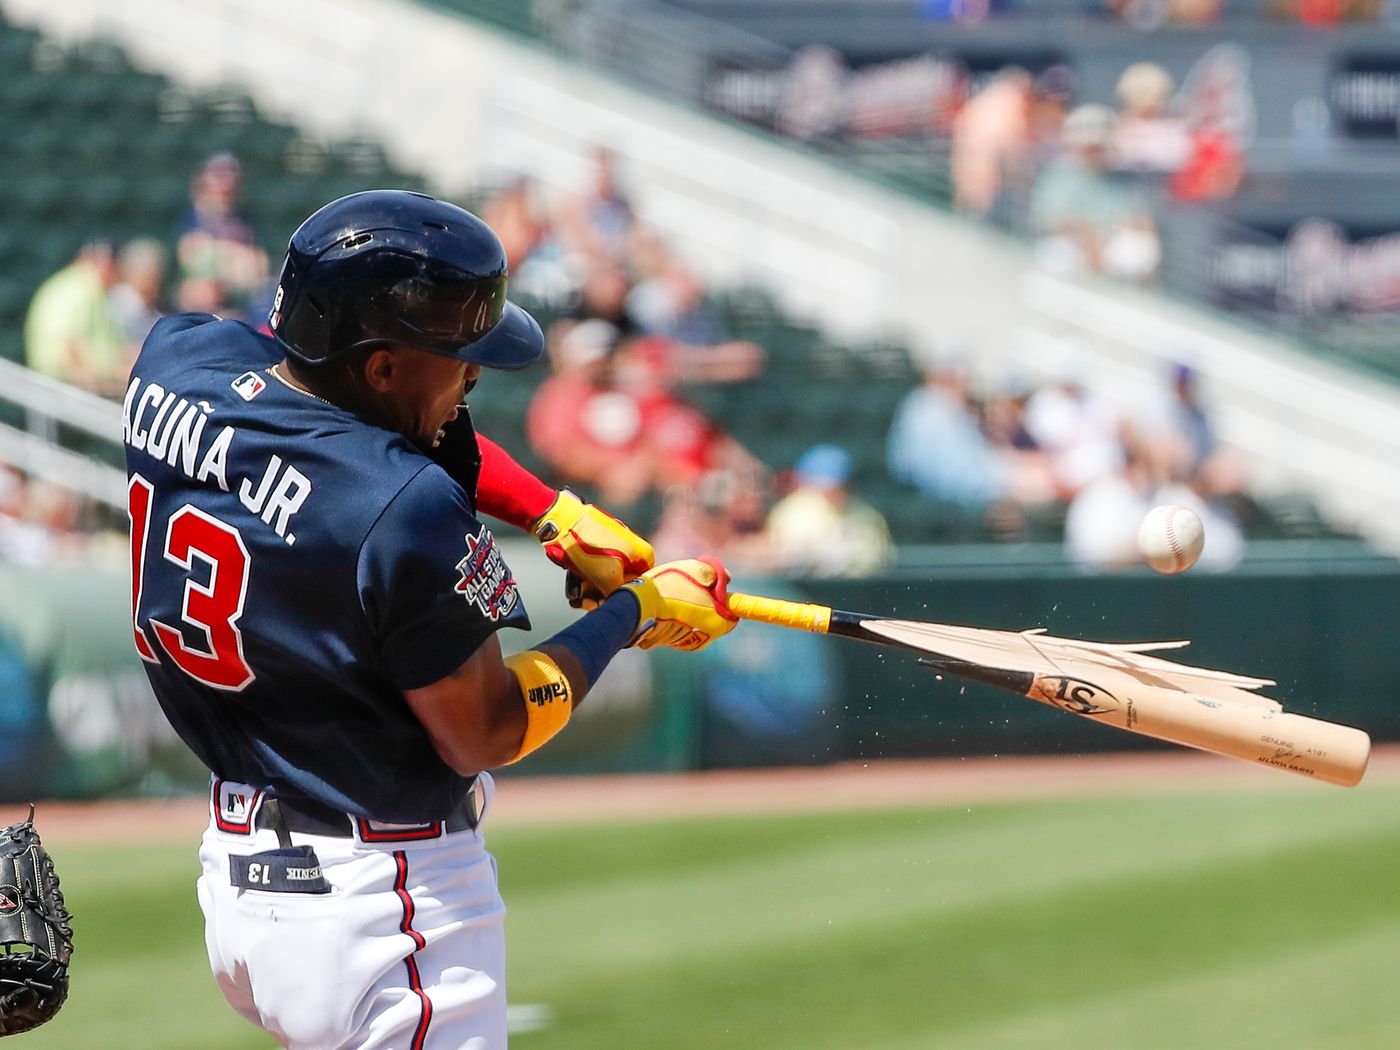 MLB picks 2021: Will Ronald Acuna Jr. or Juan Soto hit more home runs this season?